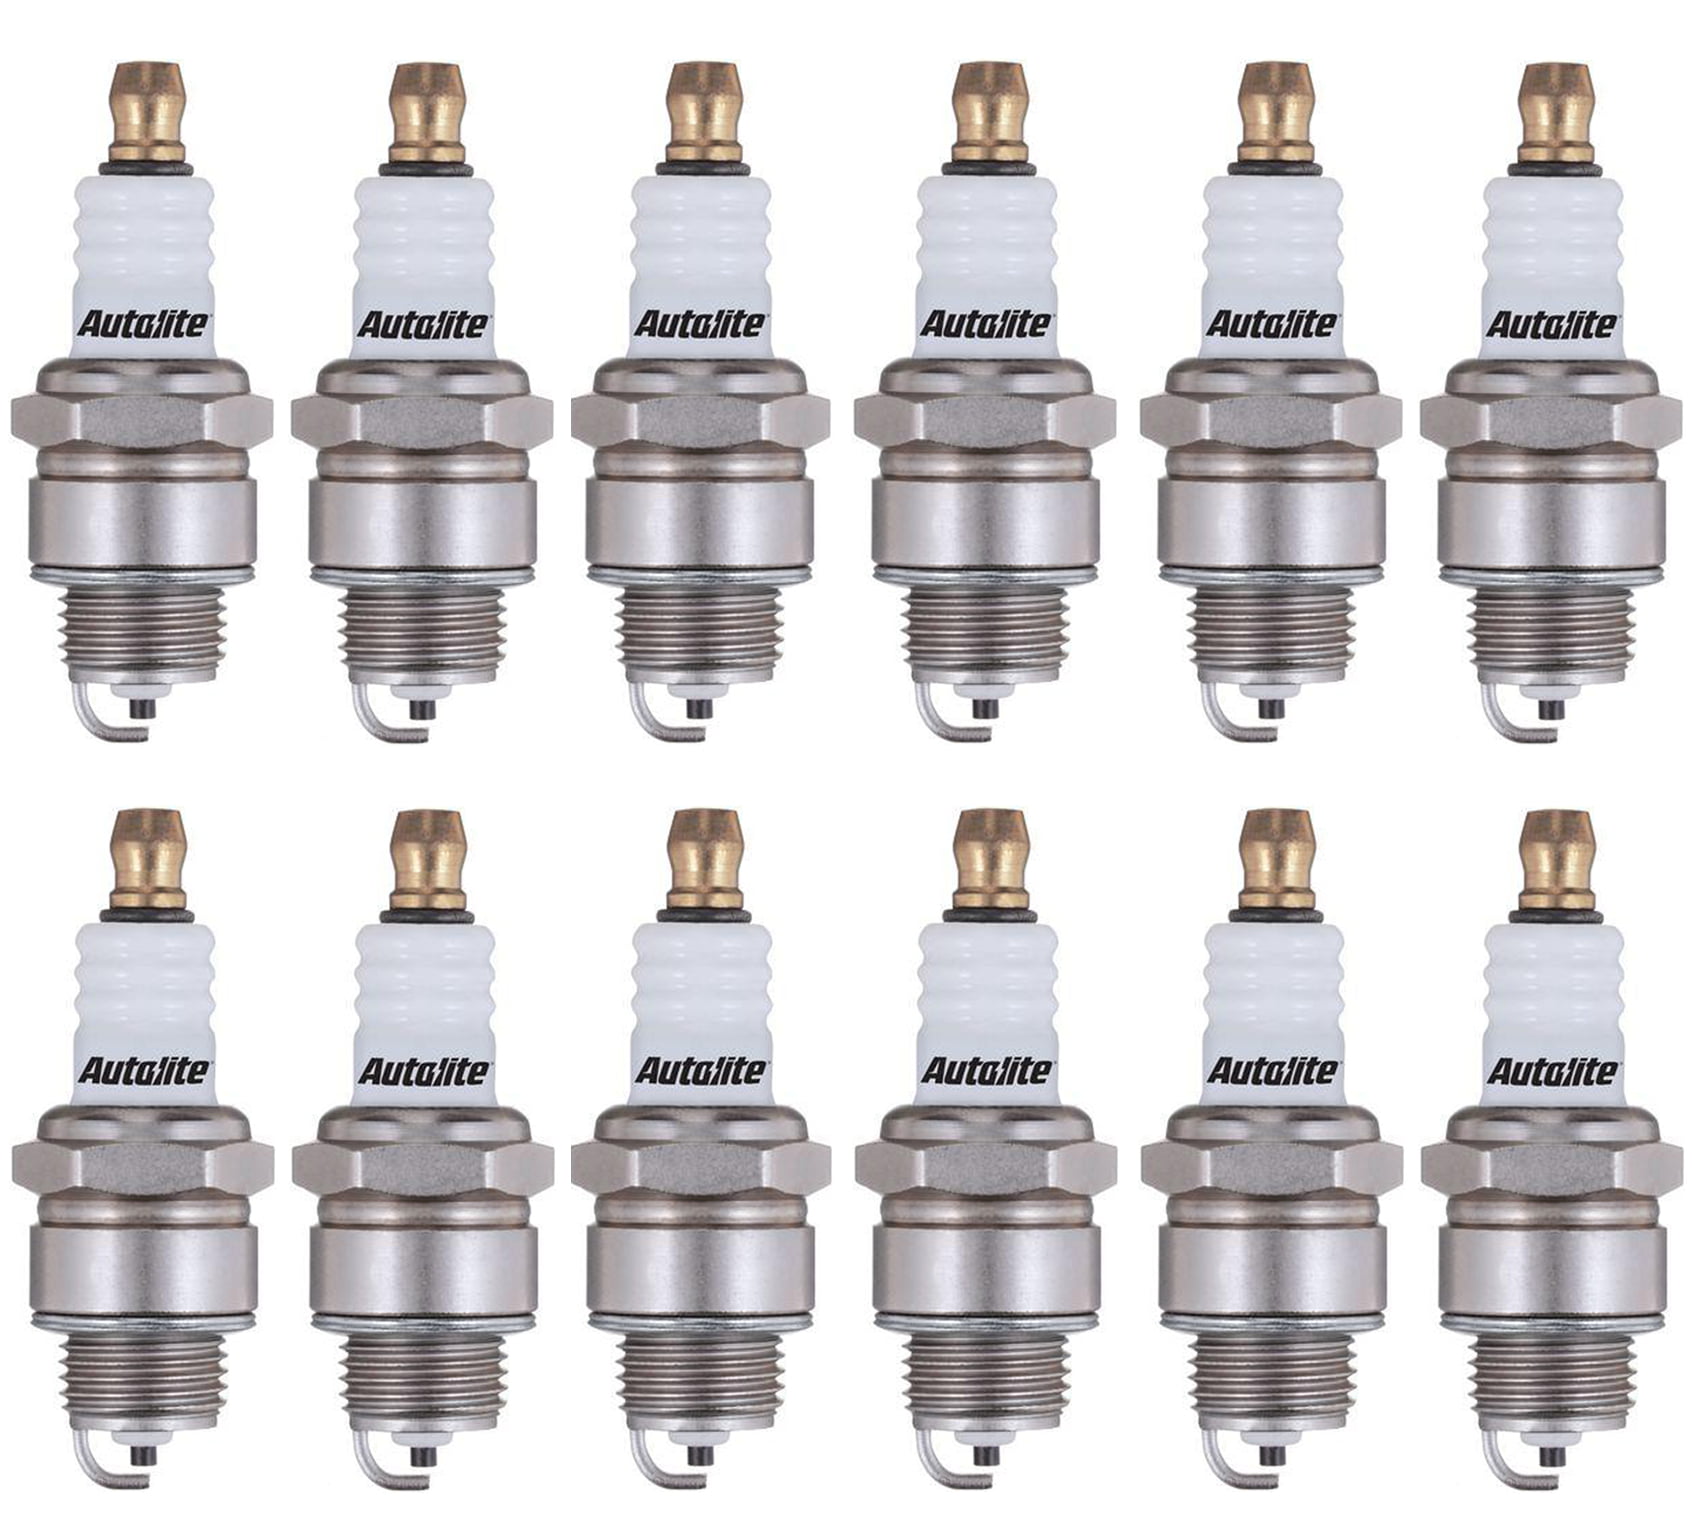 Autolite Small Engine Copper Core Spark Plugs # 458-12PK 12 Pack 